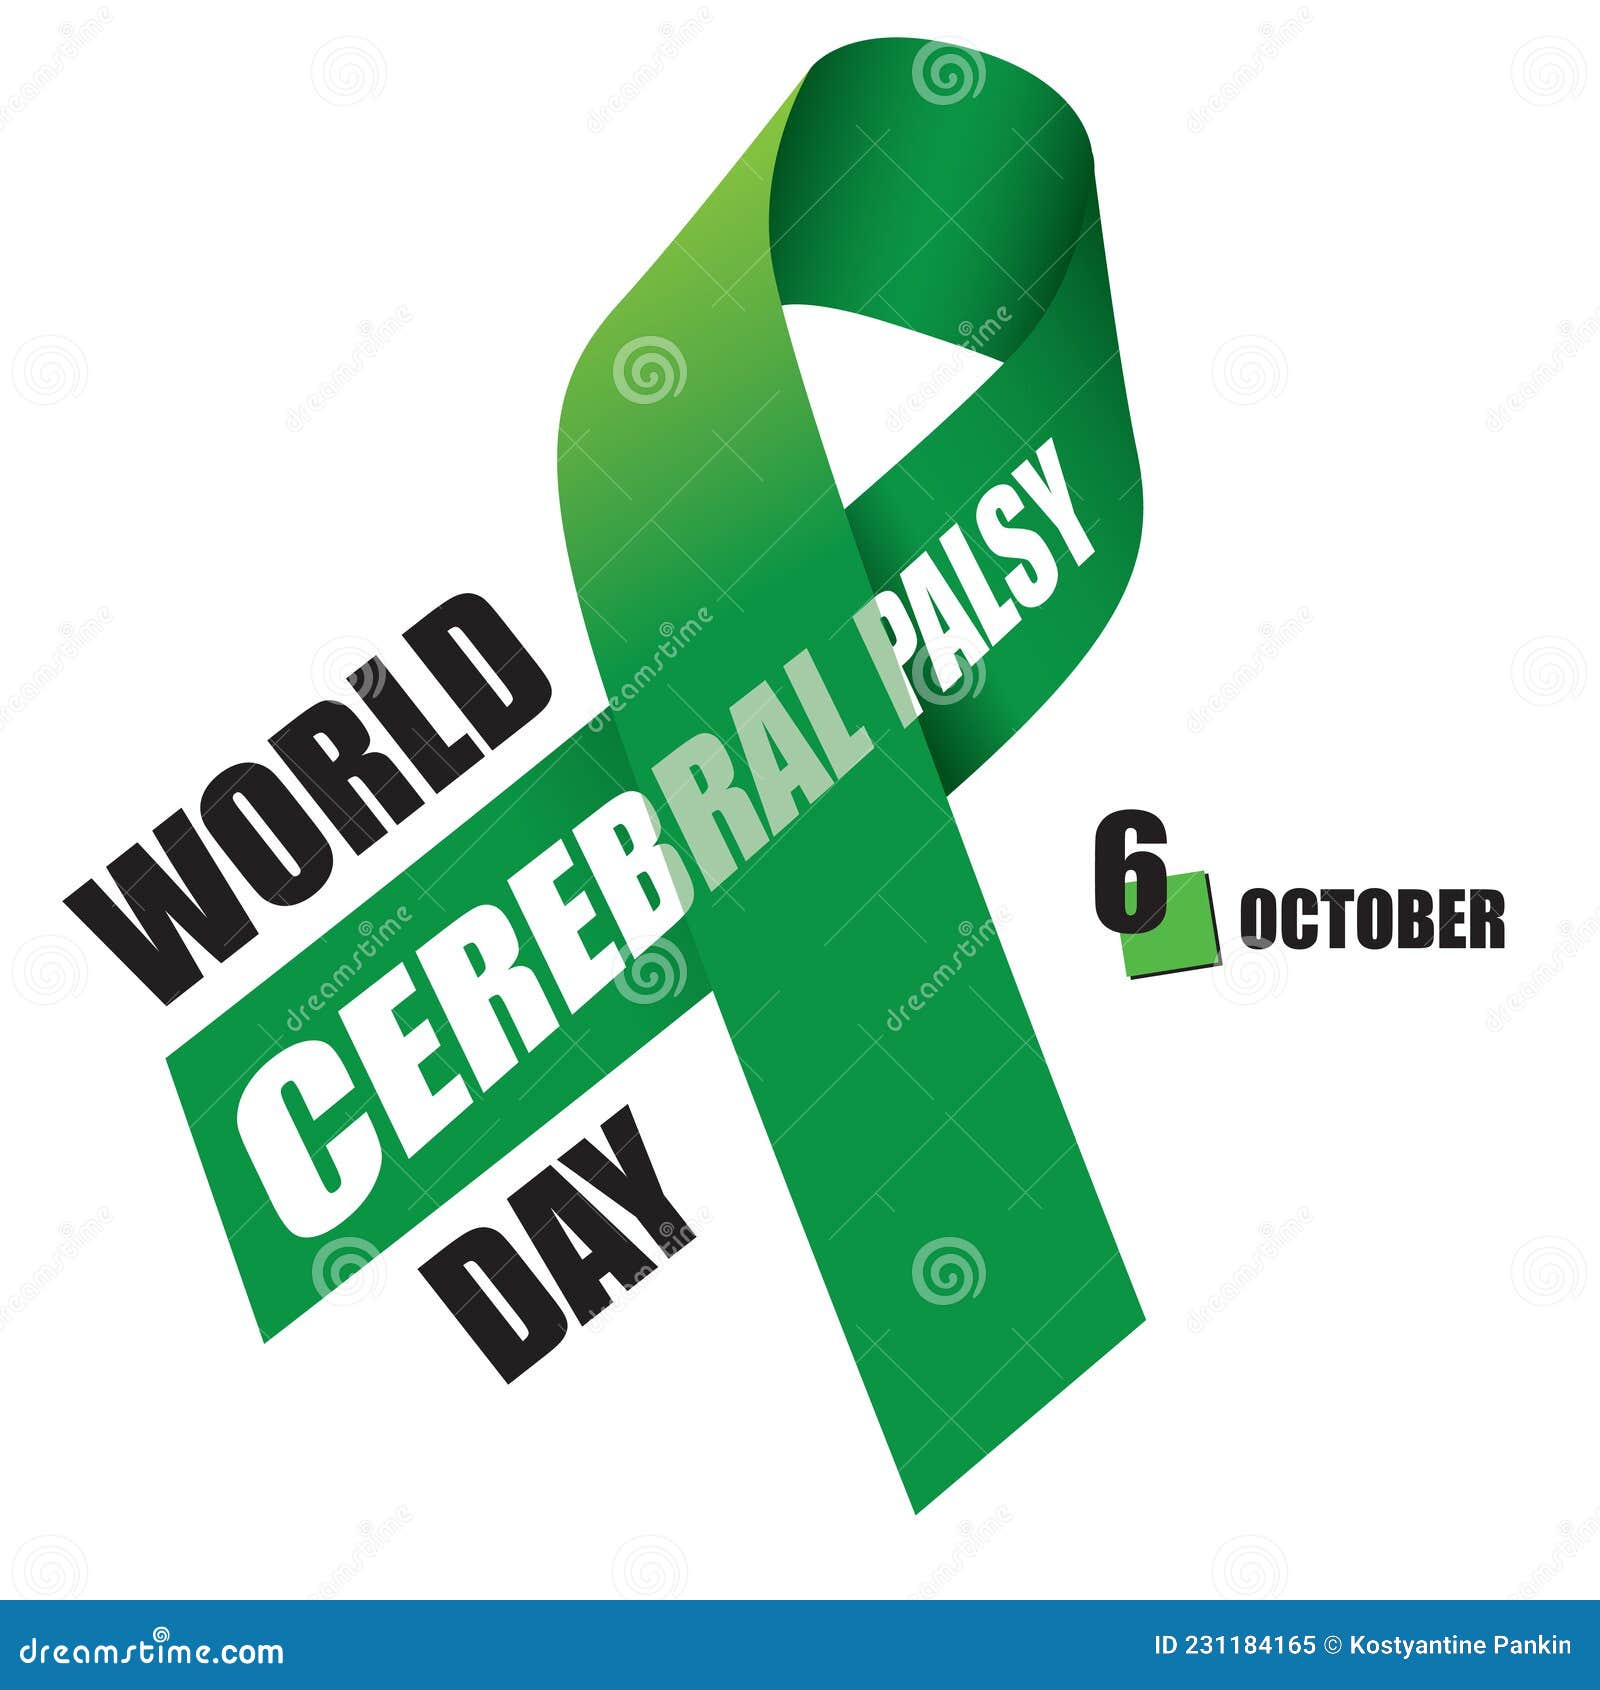 world cerebral palsy day